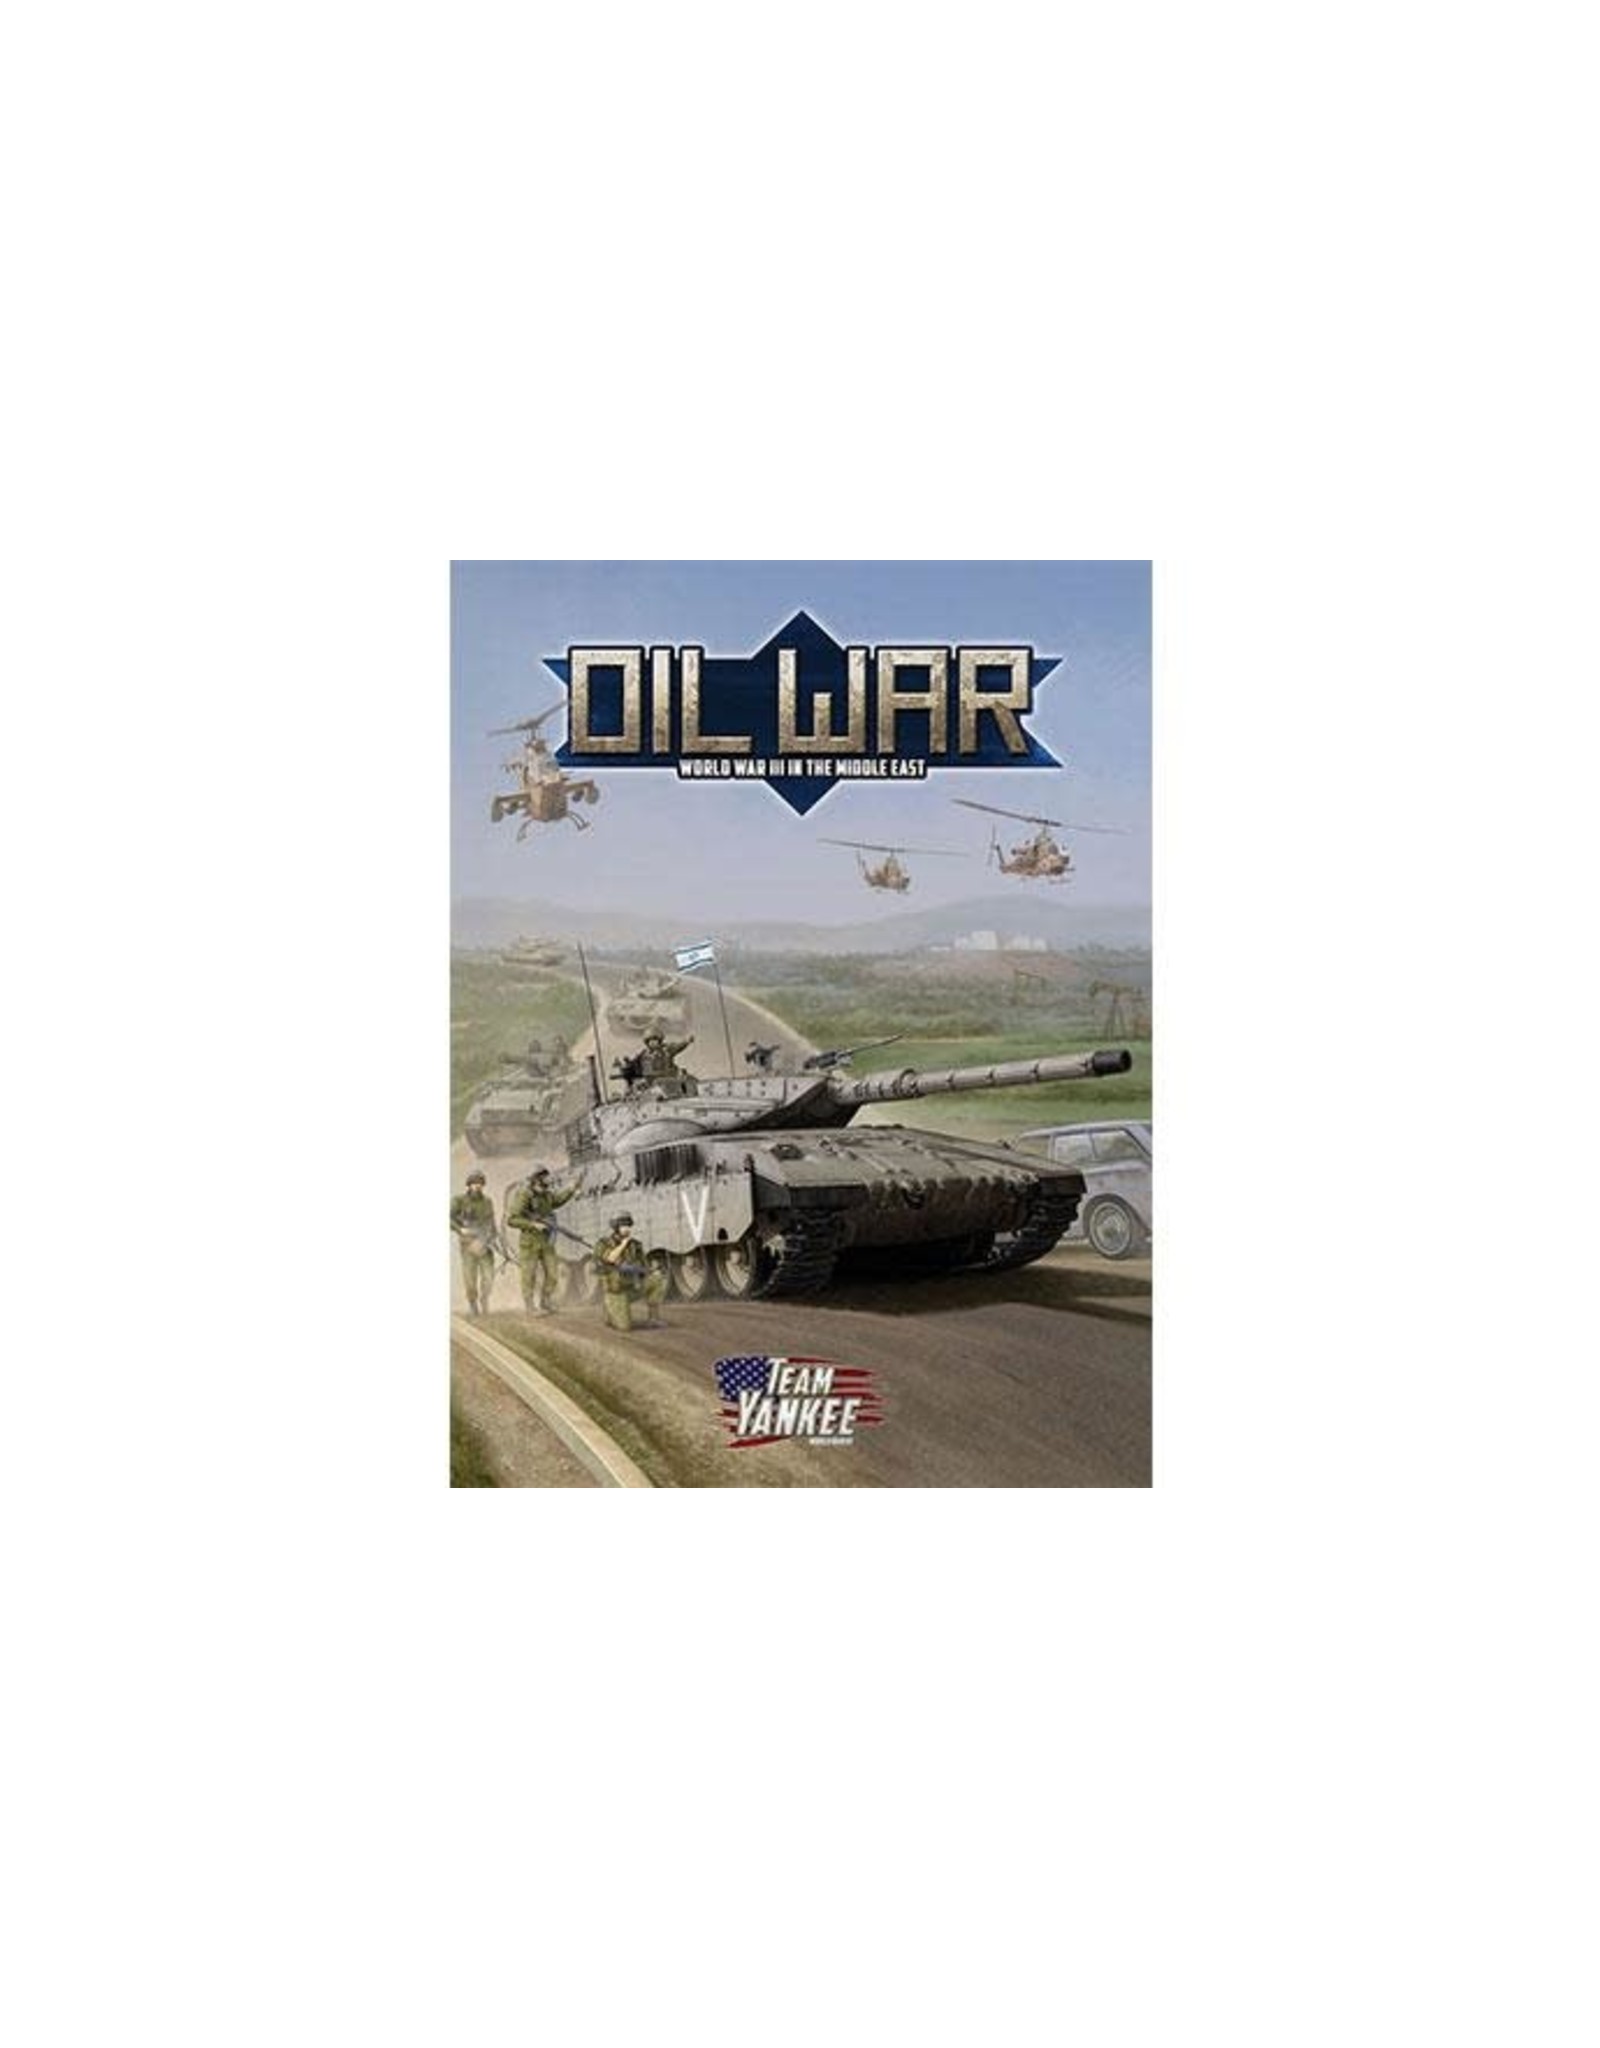 Battlefront Miniatures Team Yankee: Oil War Army Book